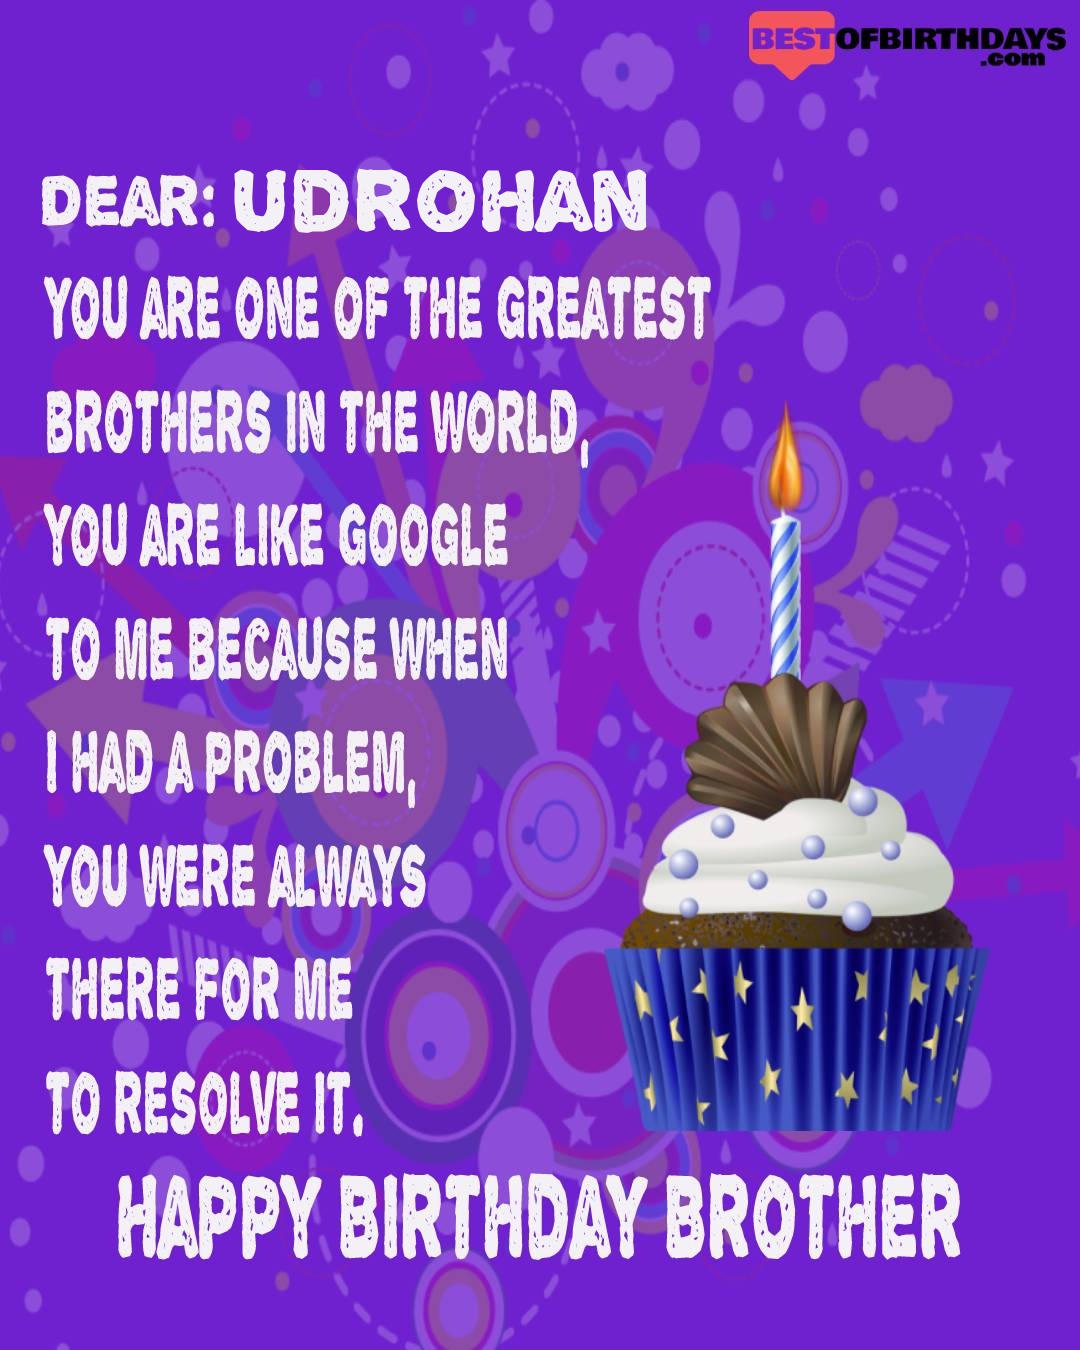 Happy birthday udrohan bhai brother bro